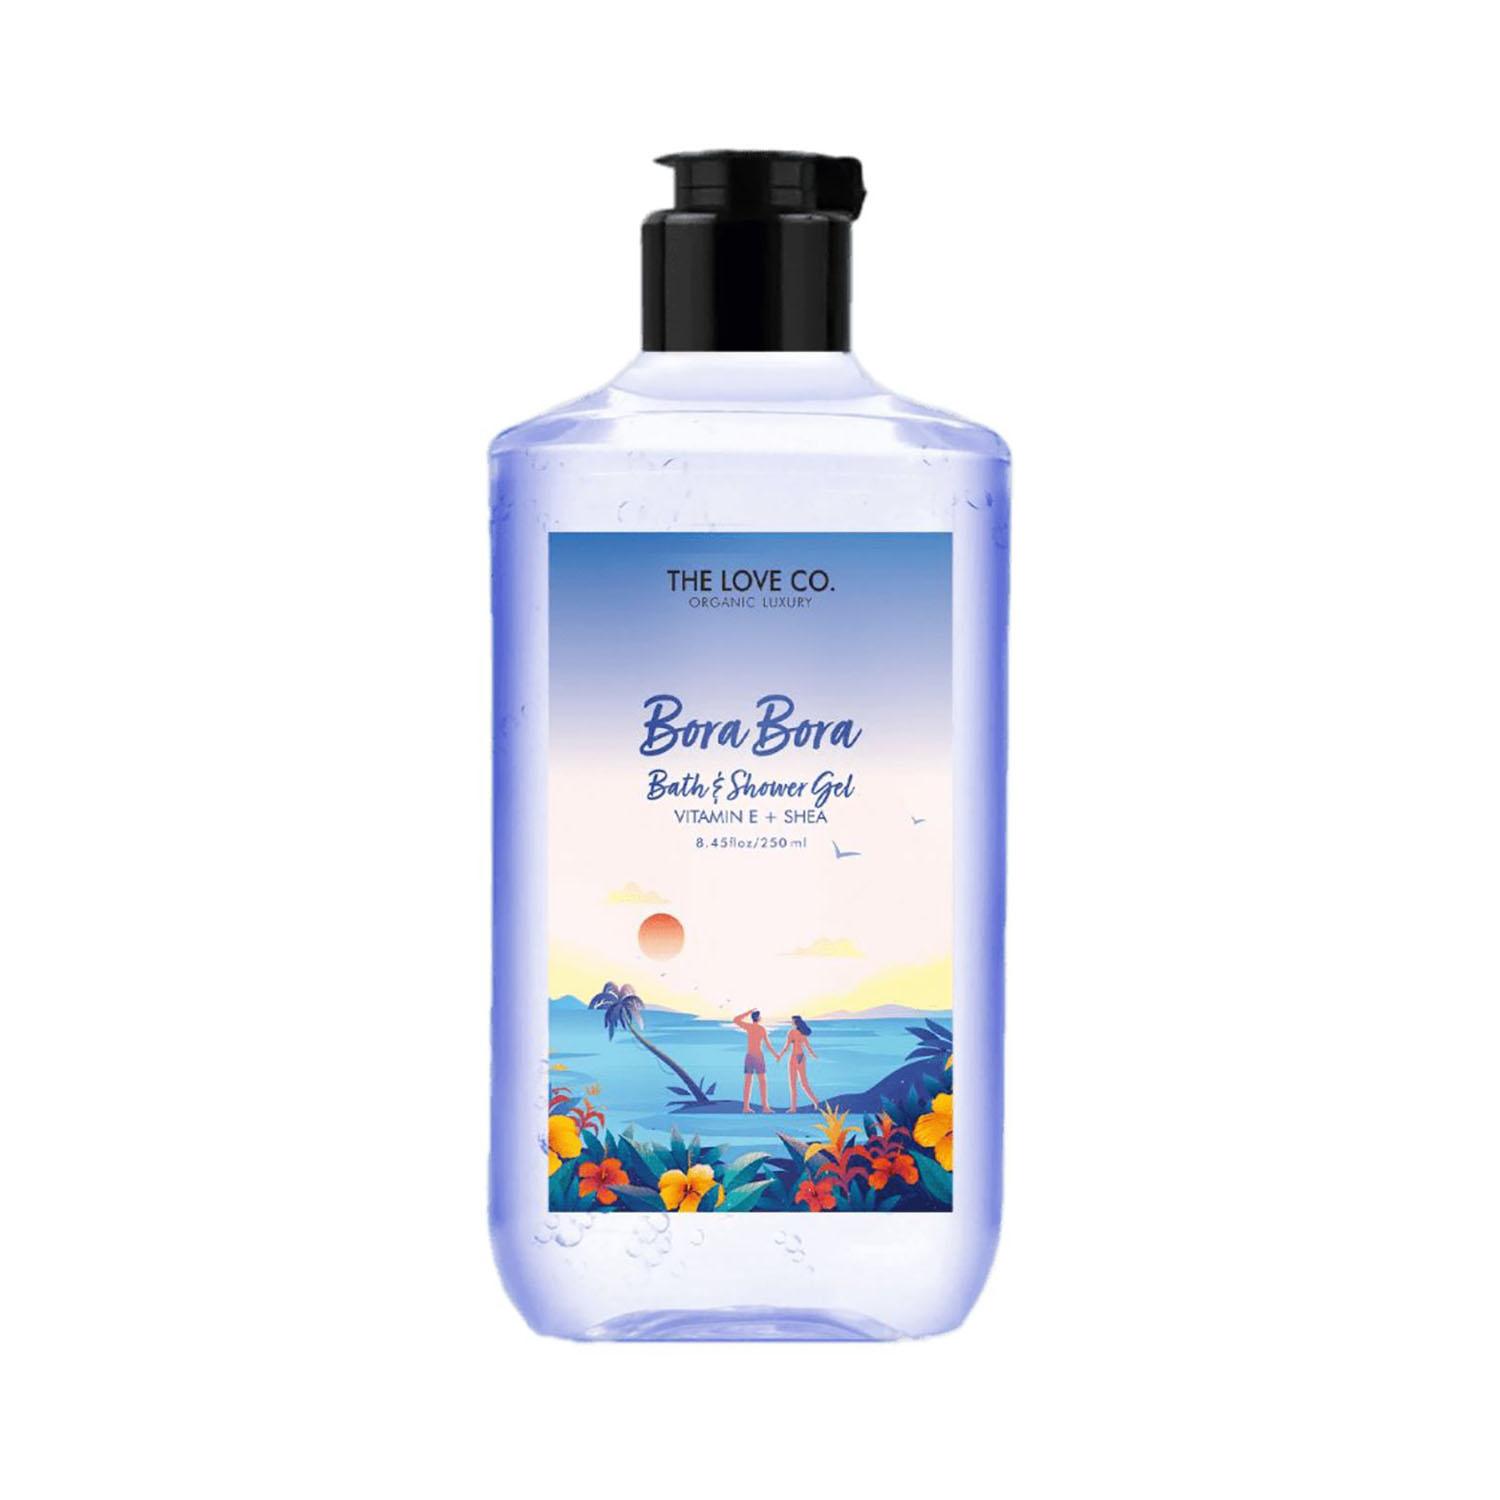 THE LOVE CO. | THE LOVE CO. Bora Bora Bath and Shower Gel (250ml)